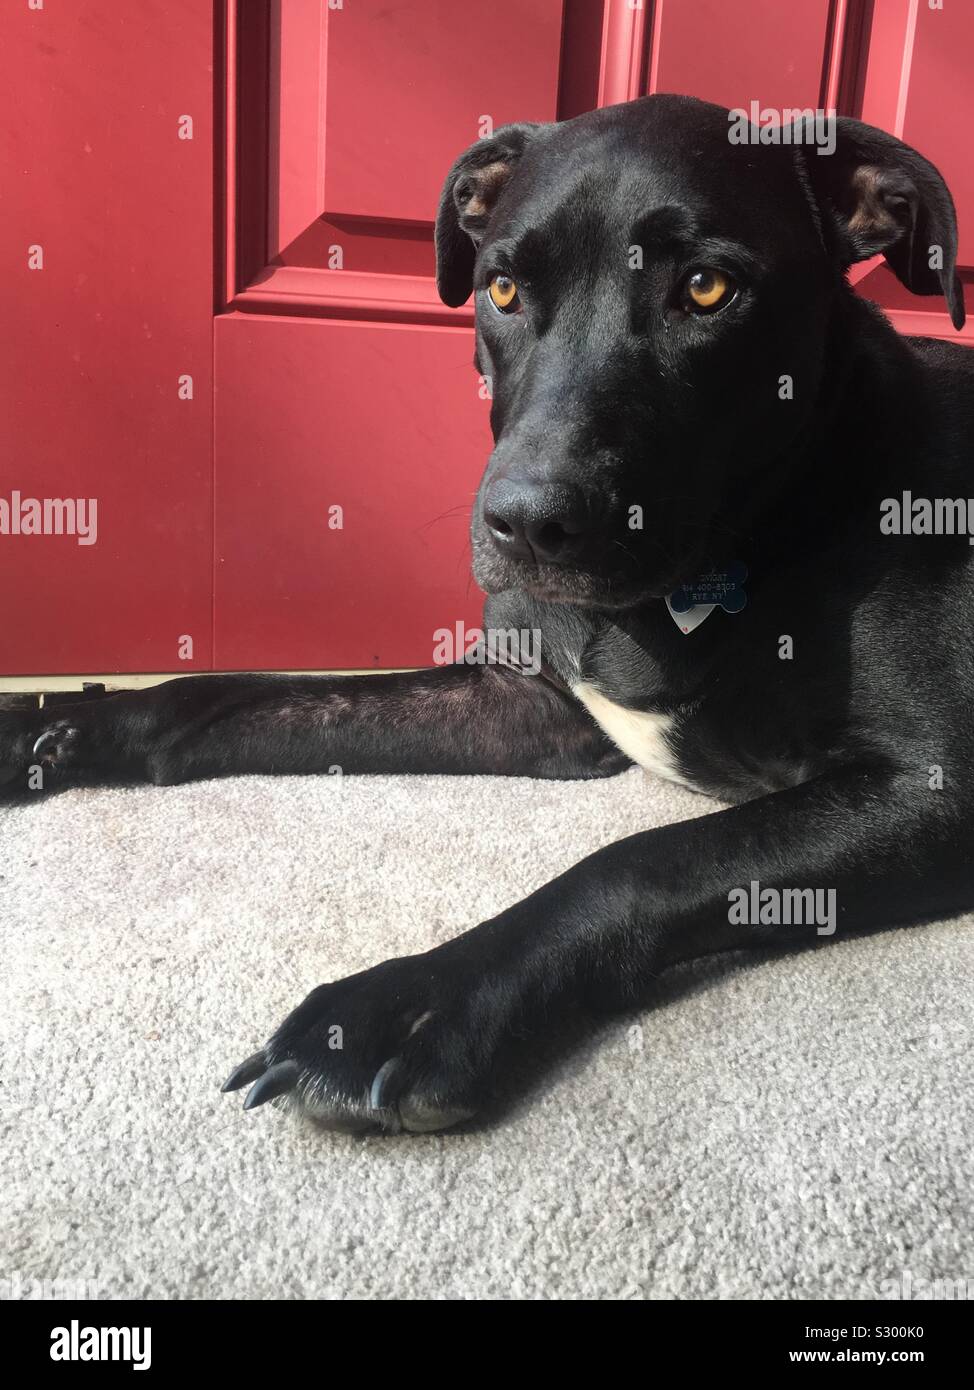 Black dog by red door Stock Photo